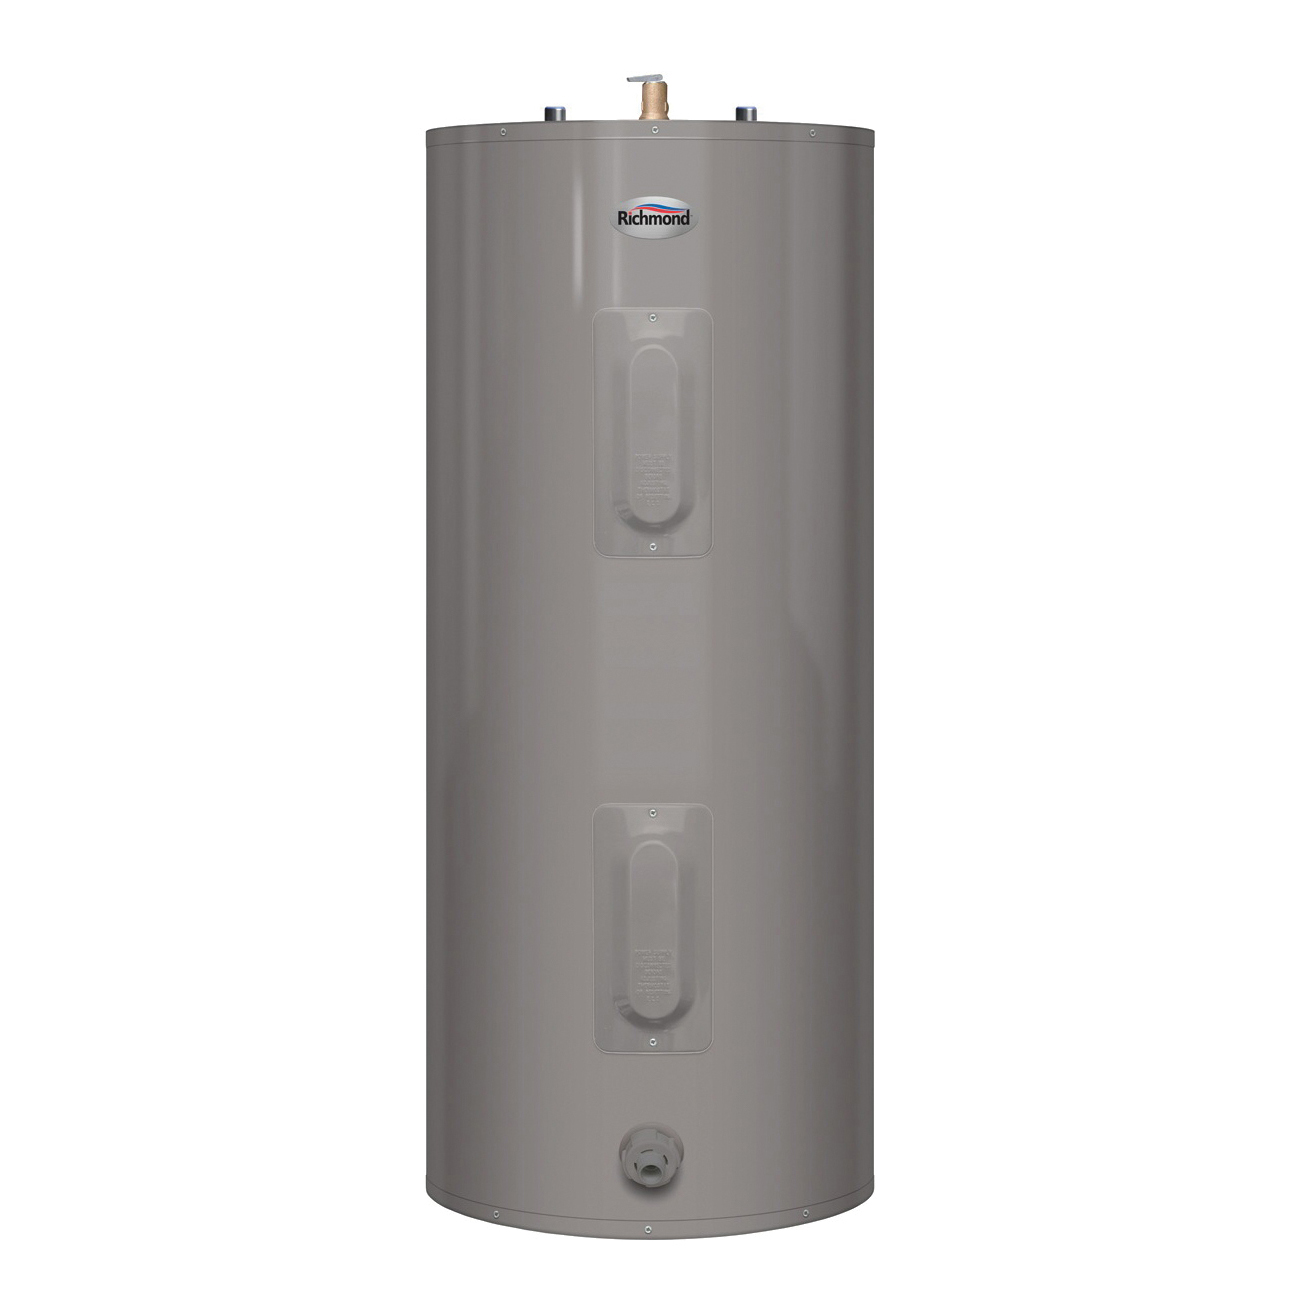 Essential Series 6EM40-D Electric Water Heater, 240 V, 4500 W, 40 gal Tank, 90 to 93 % Energy Efficiency